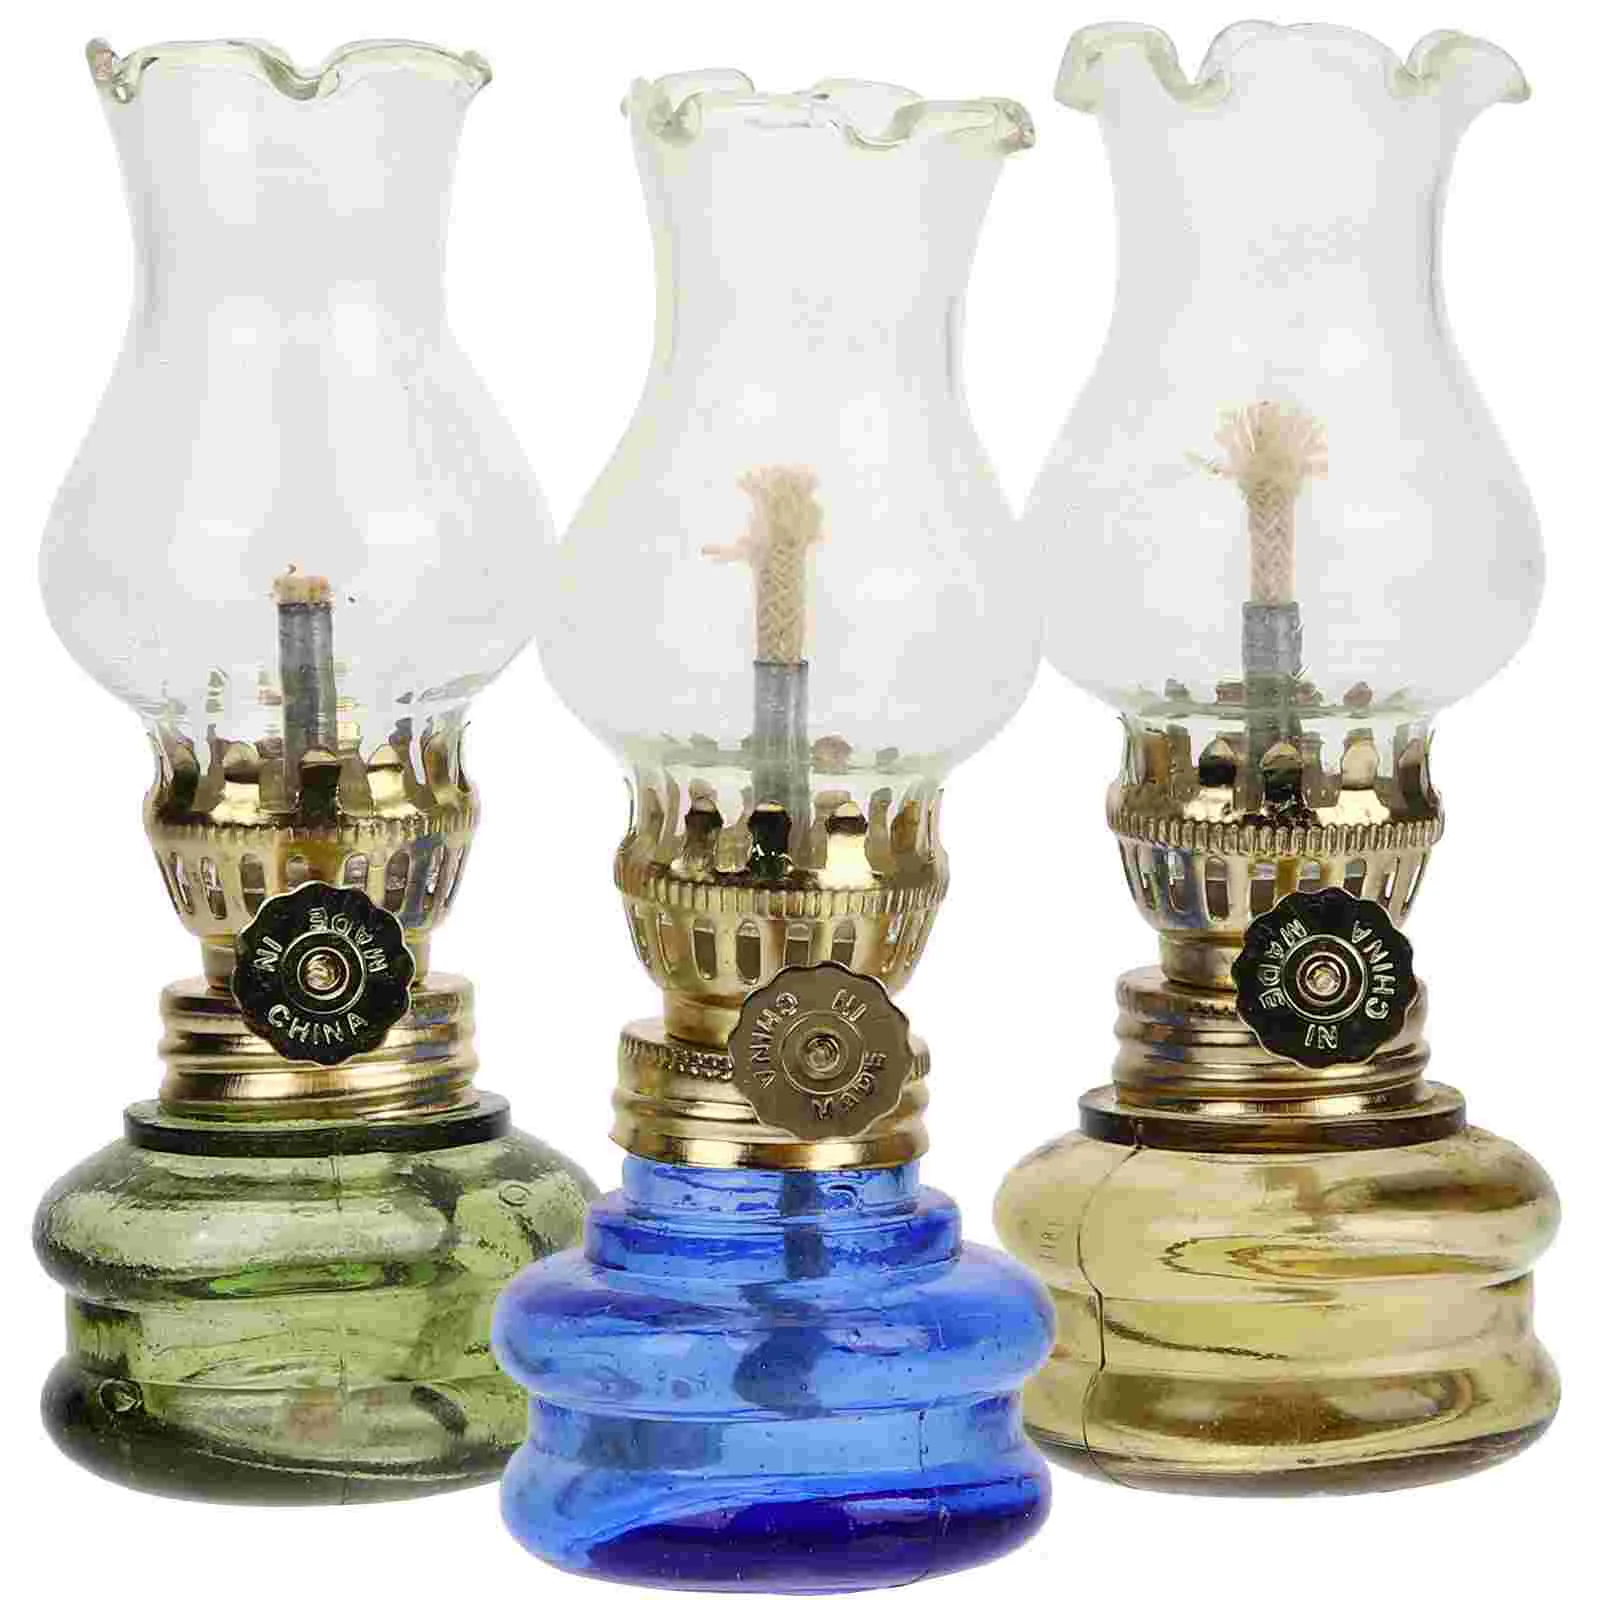 

3 Pcs Kerosene Lamp Large Chamber Oil Lantern Country Decor Nostalgia Glass Hurricane Indoor Camping